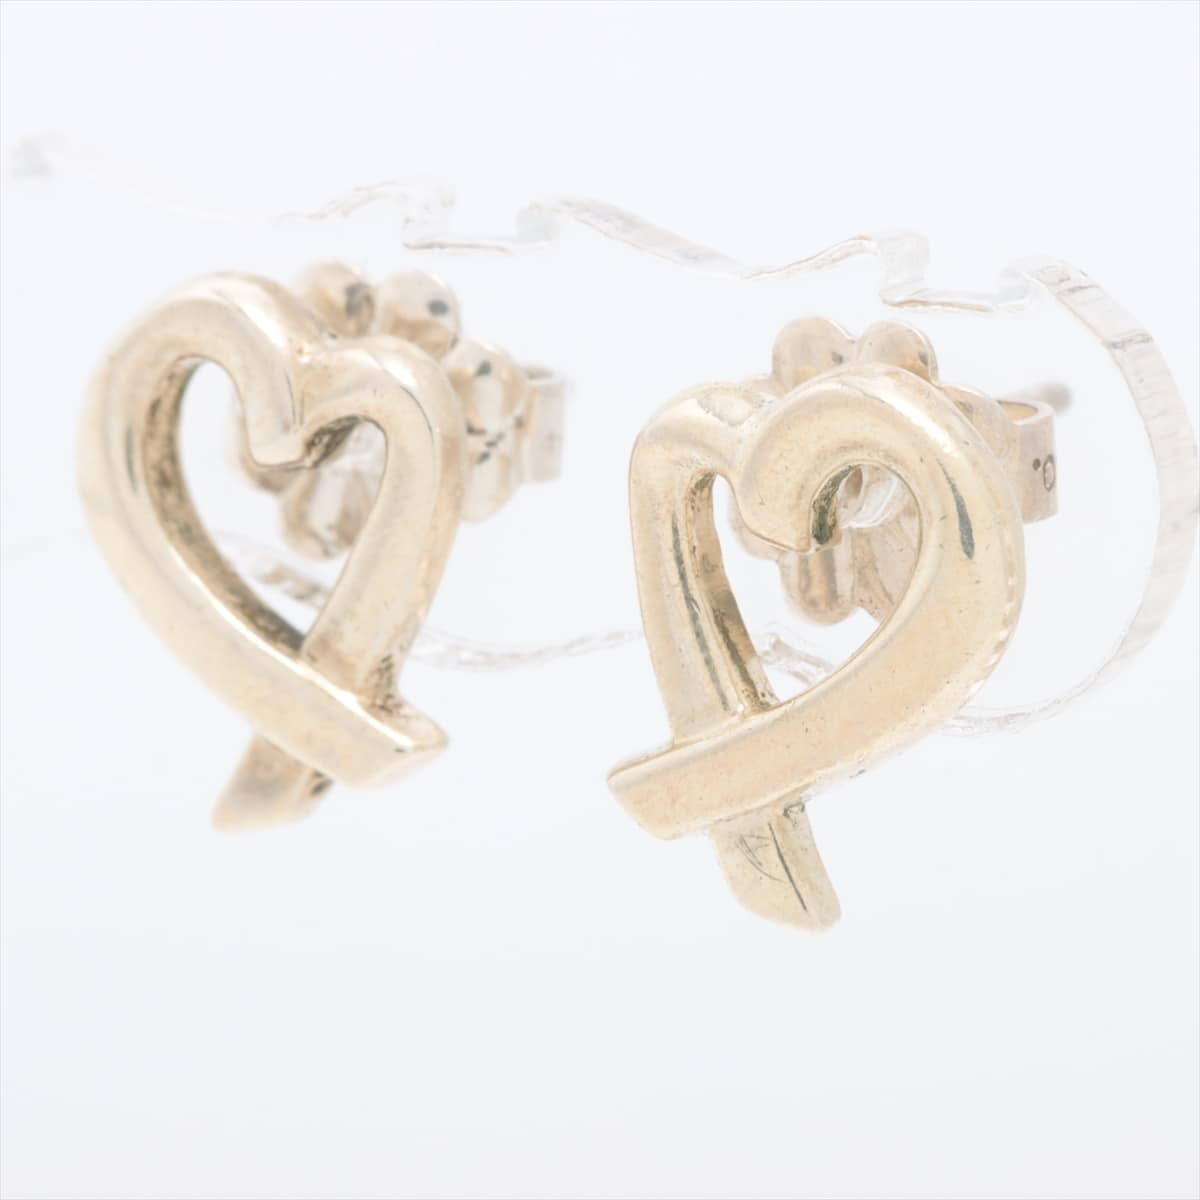 Tiffany Loving Heart Piercing jewelry (for both ears) 925 1.6g Silver